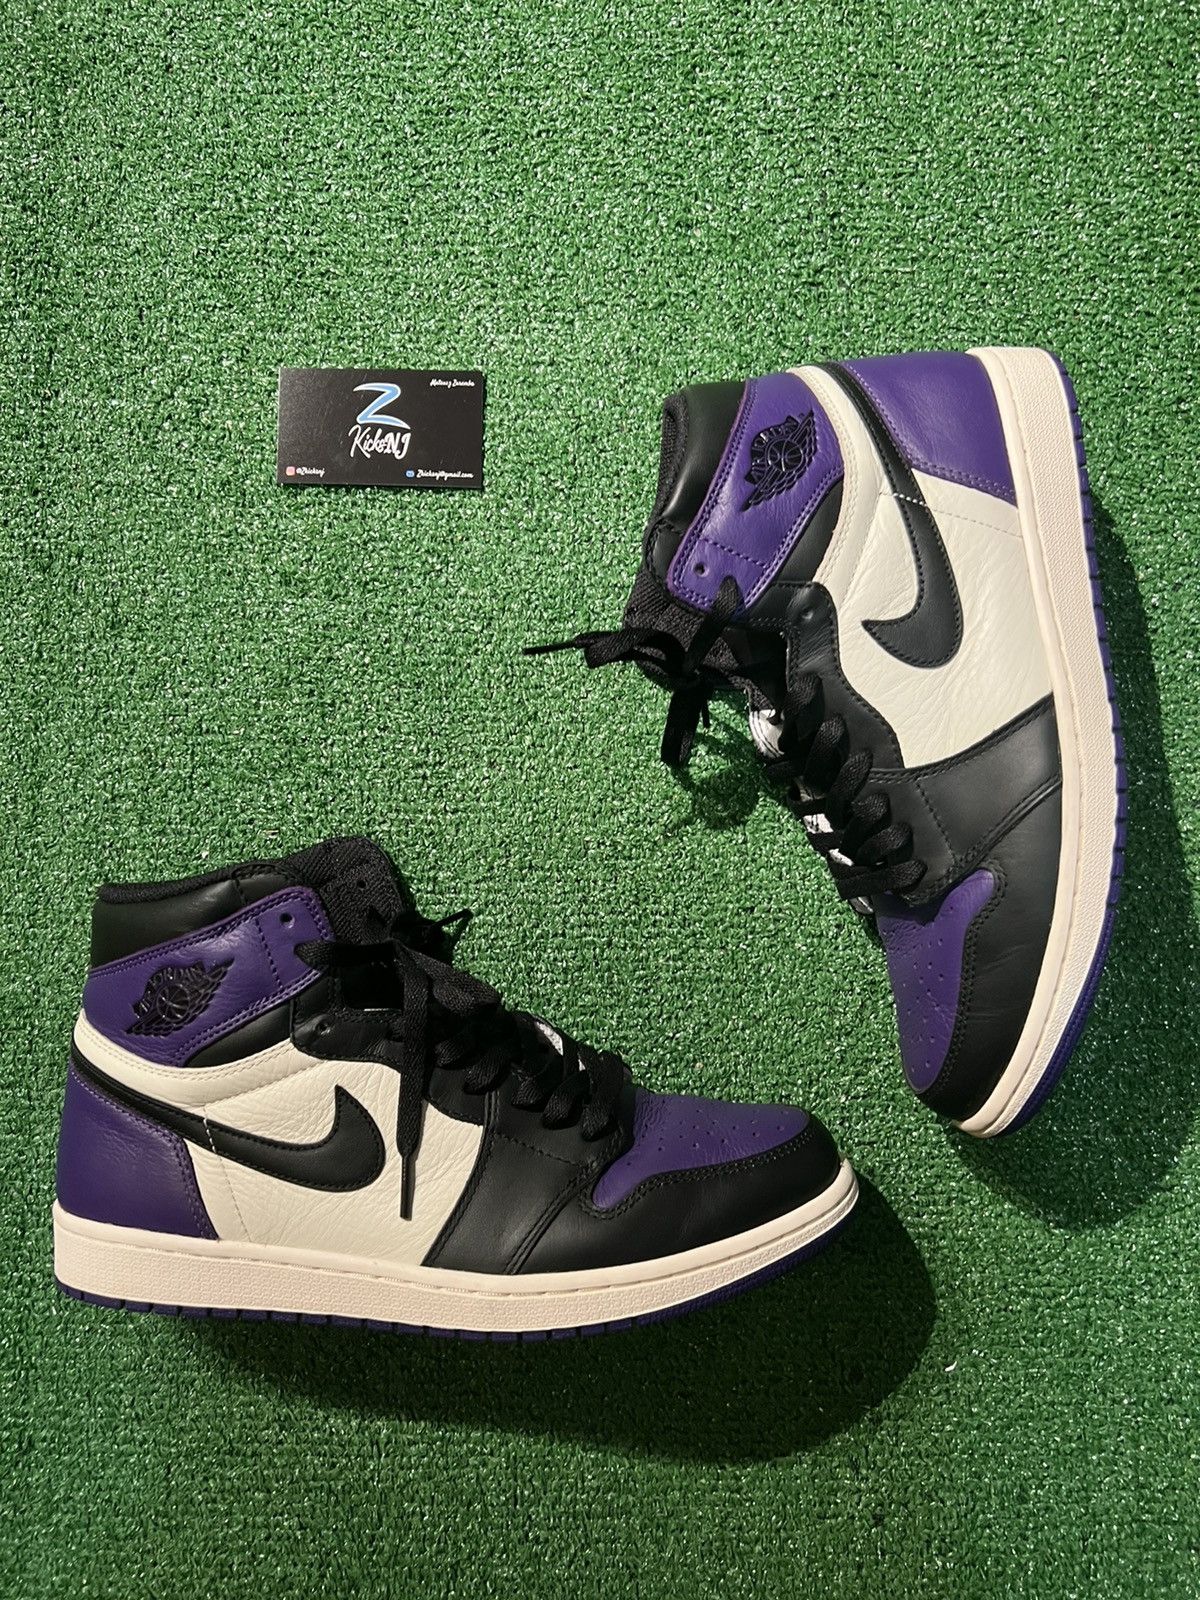 Pre-owned Jordan Nike Air Jordan 1 Retro High Og Court Purple 2018 Shoes